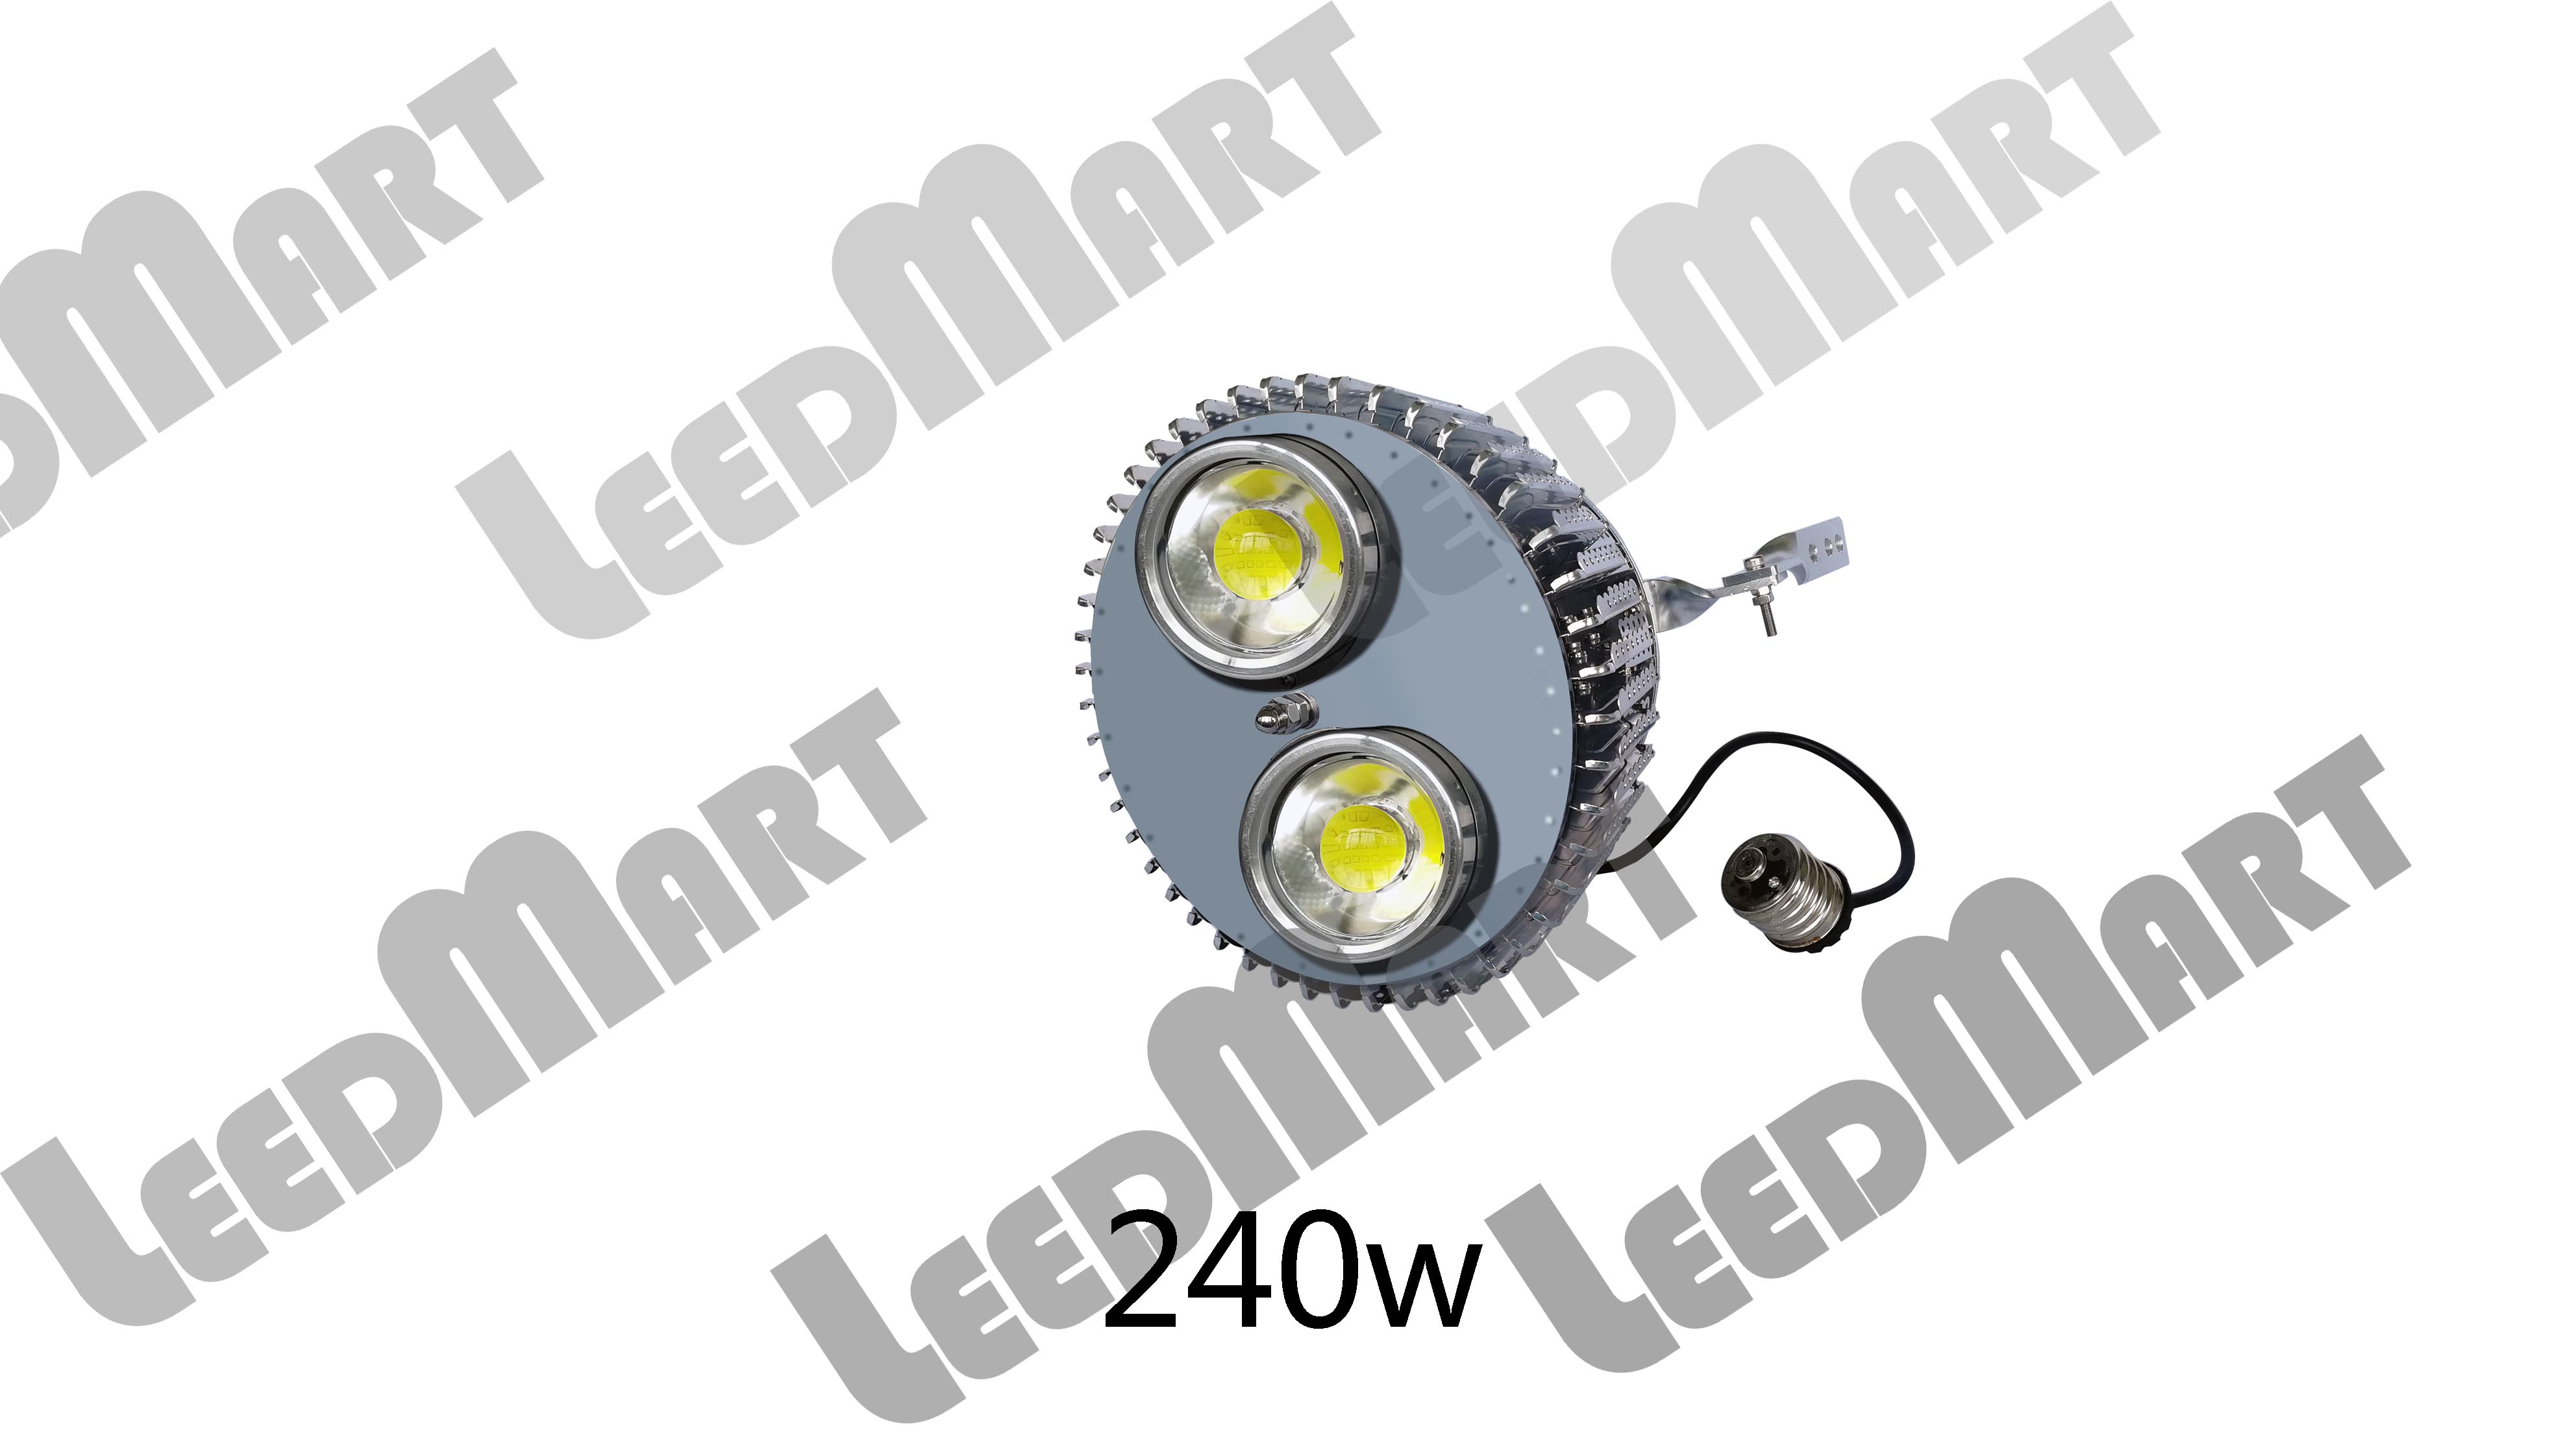 LED fishing light attractor IP65 high quality 240 watt 31200 lumen efficient fishing marine use